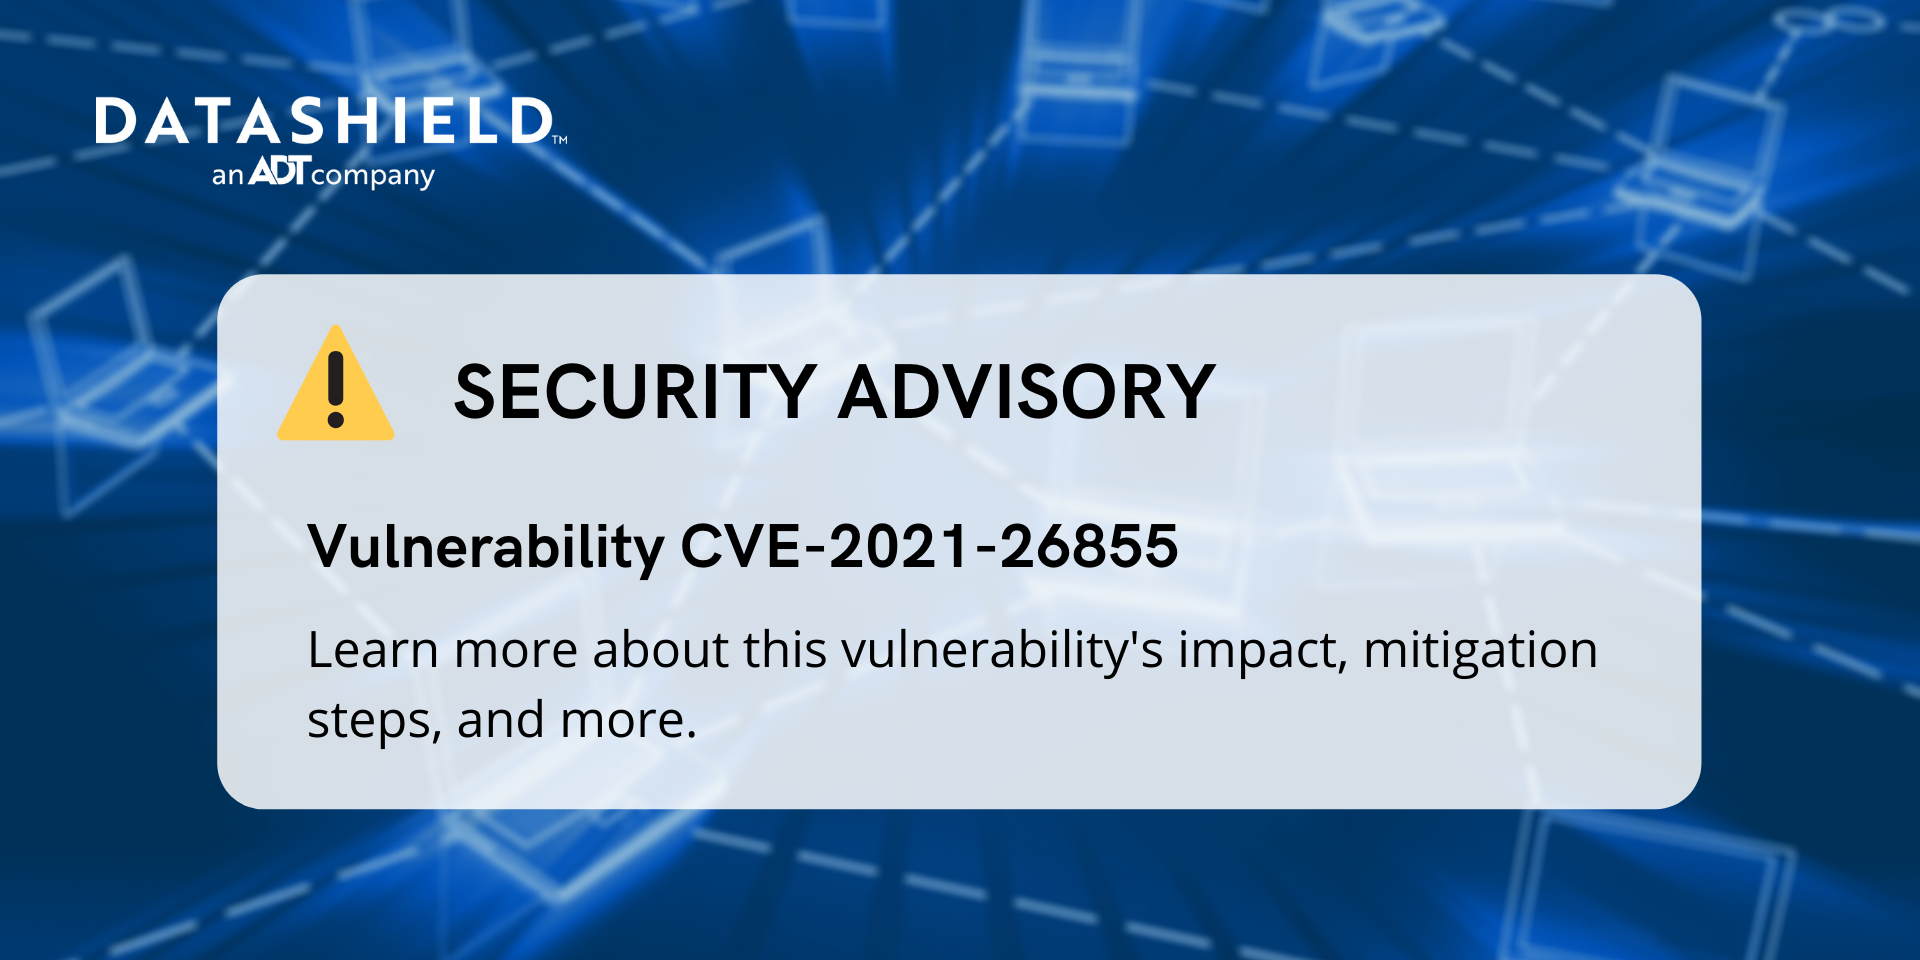 Vulnerability CVE-2021-26855